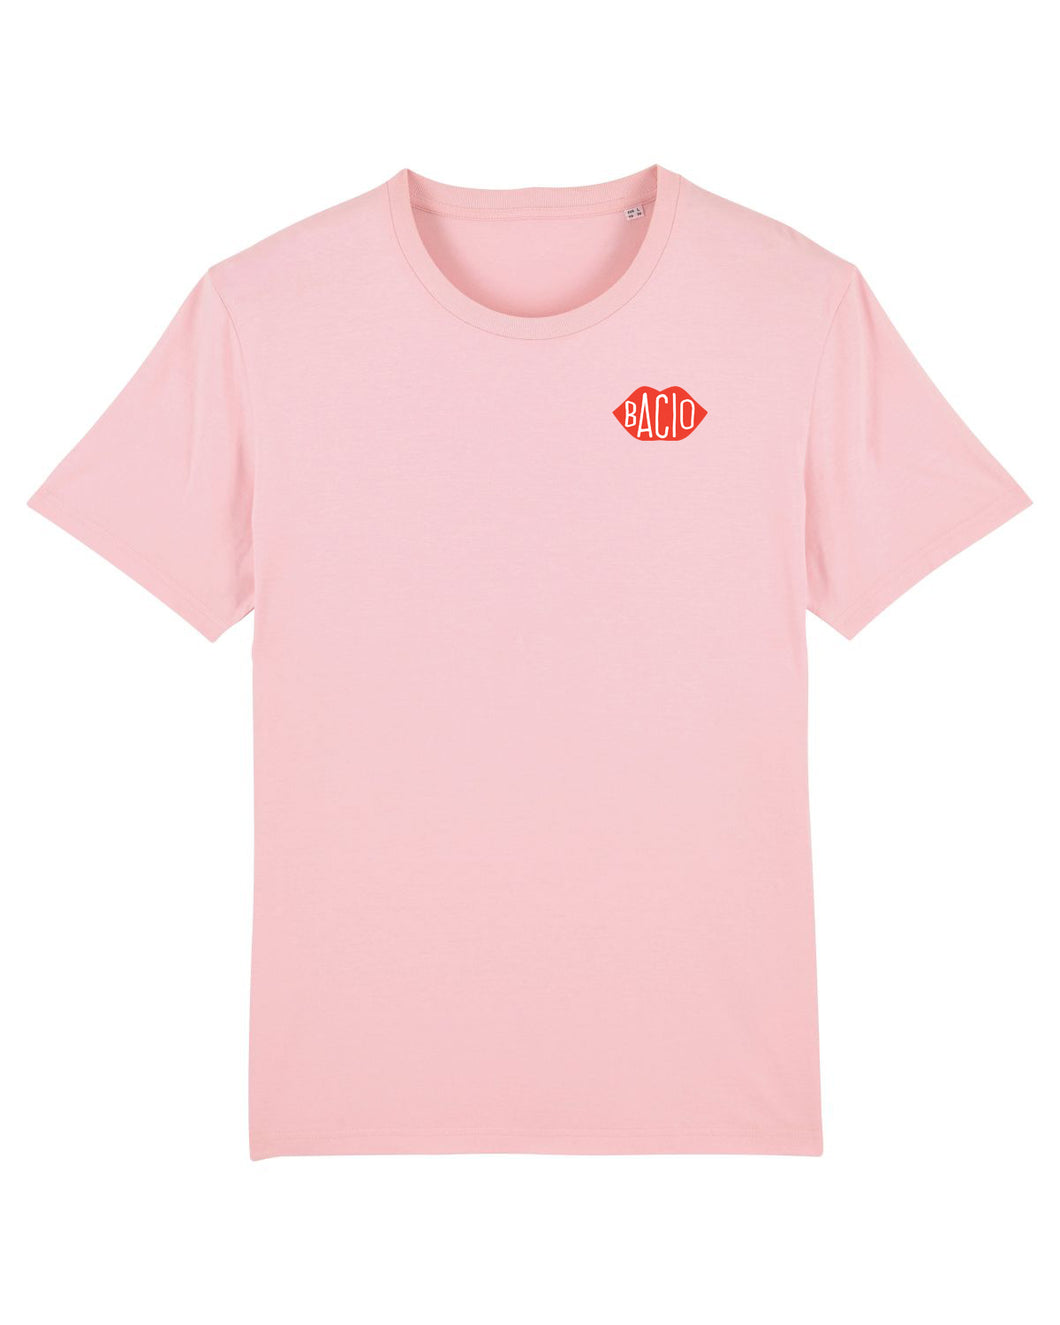 BACIO Shirt | unisex | light pink